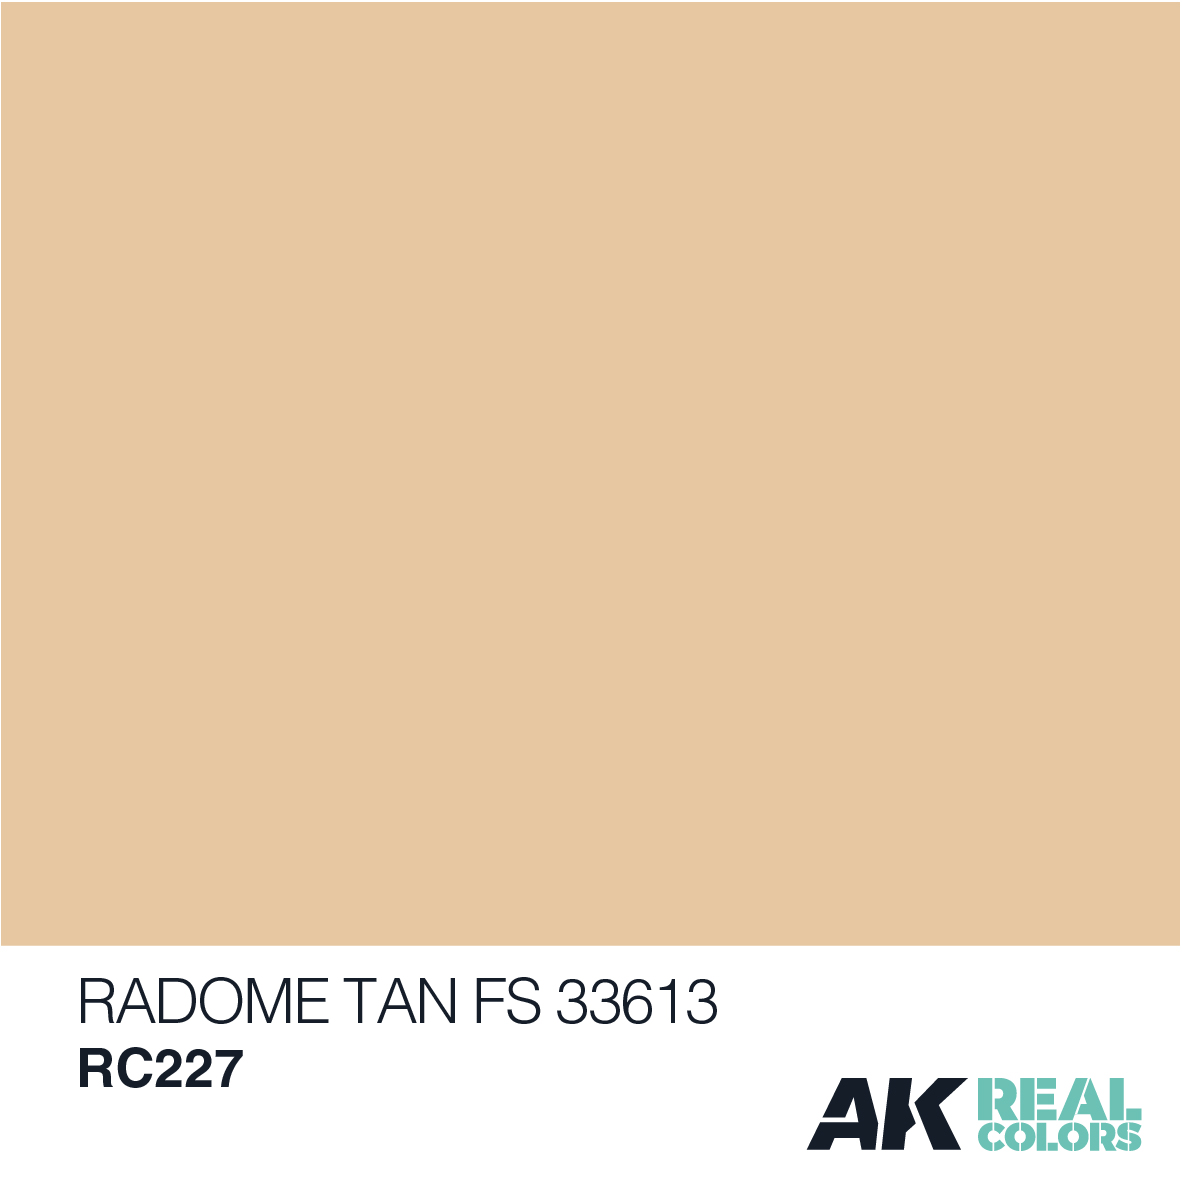 Radome Tan FS 33613